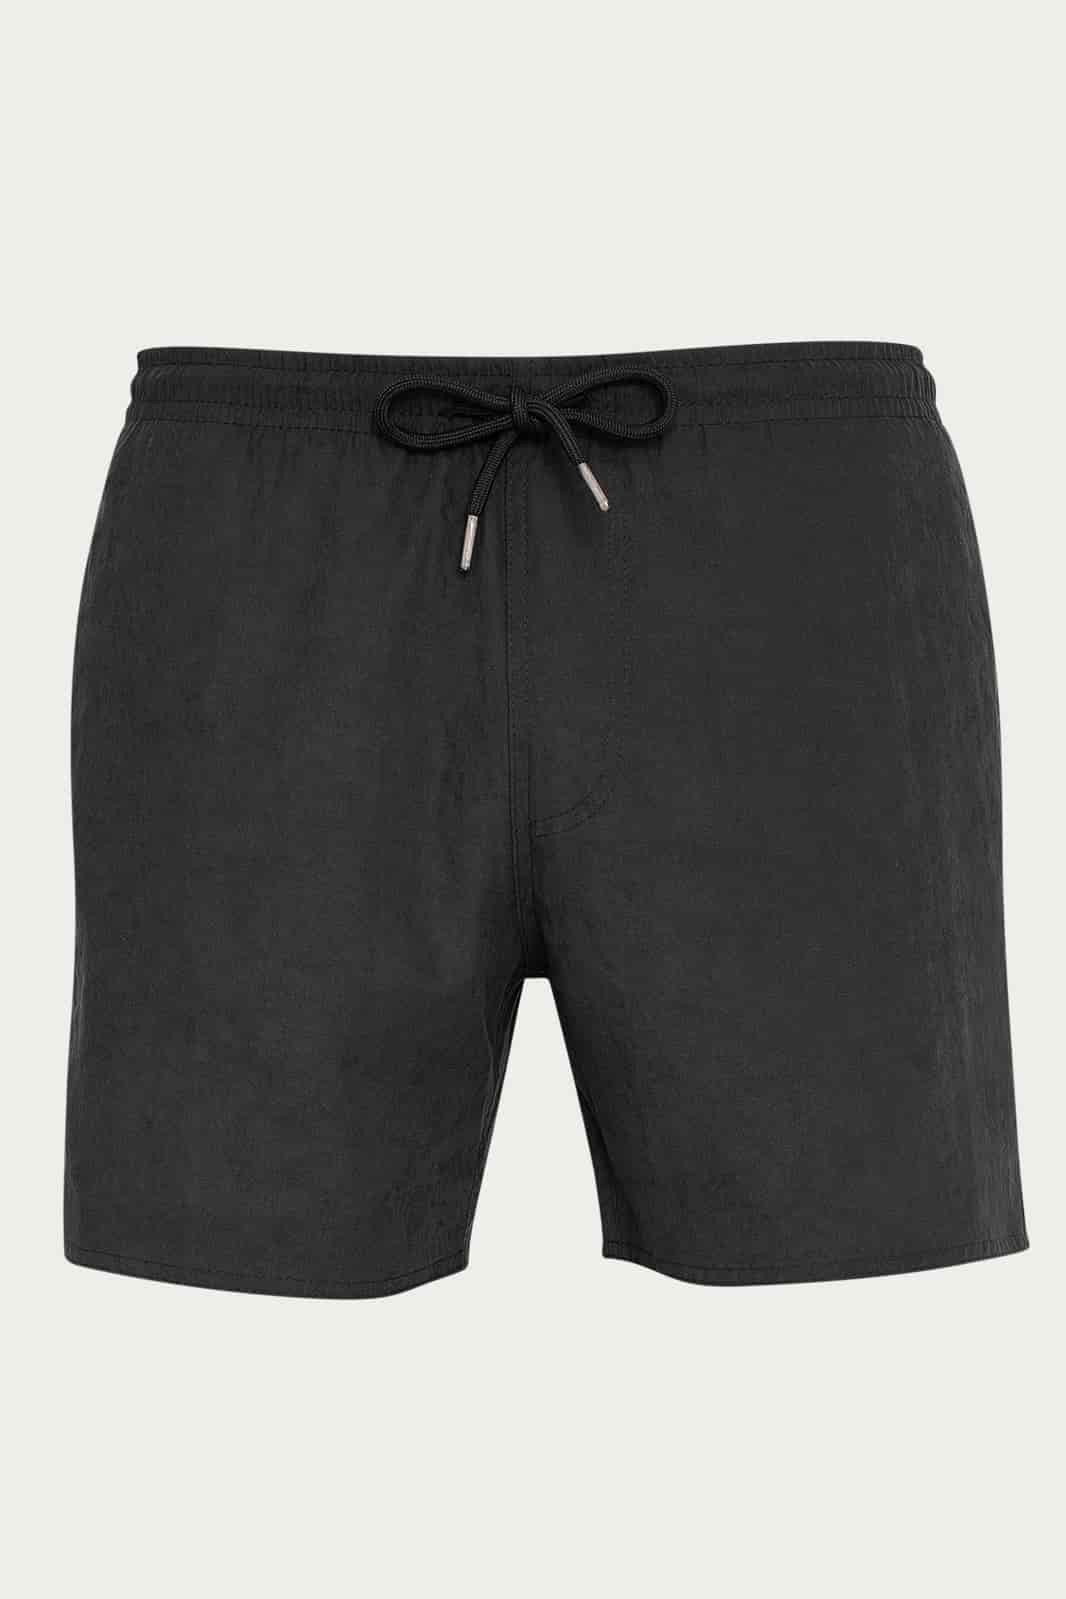 Shorts Praia Brazilian Riviera Black Edition